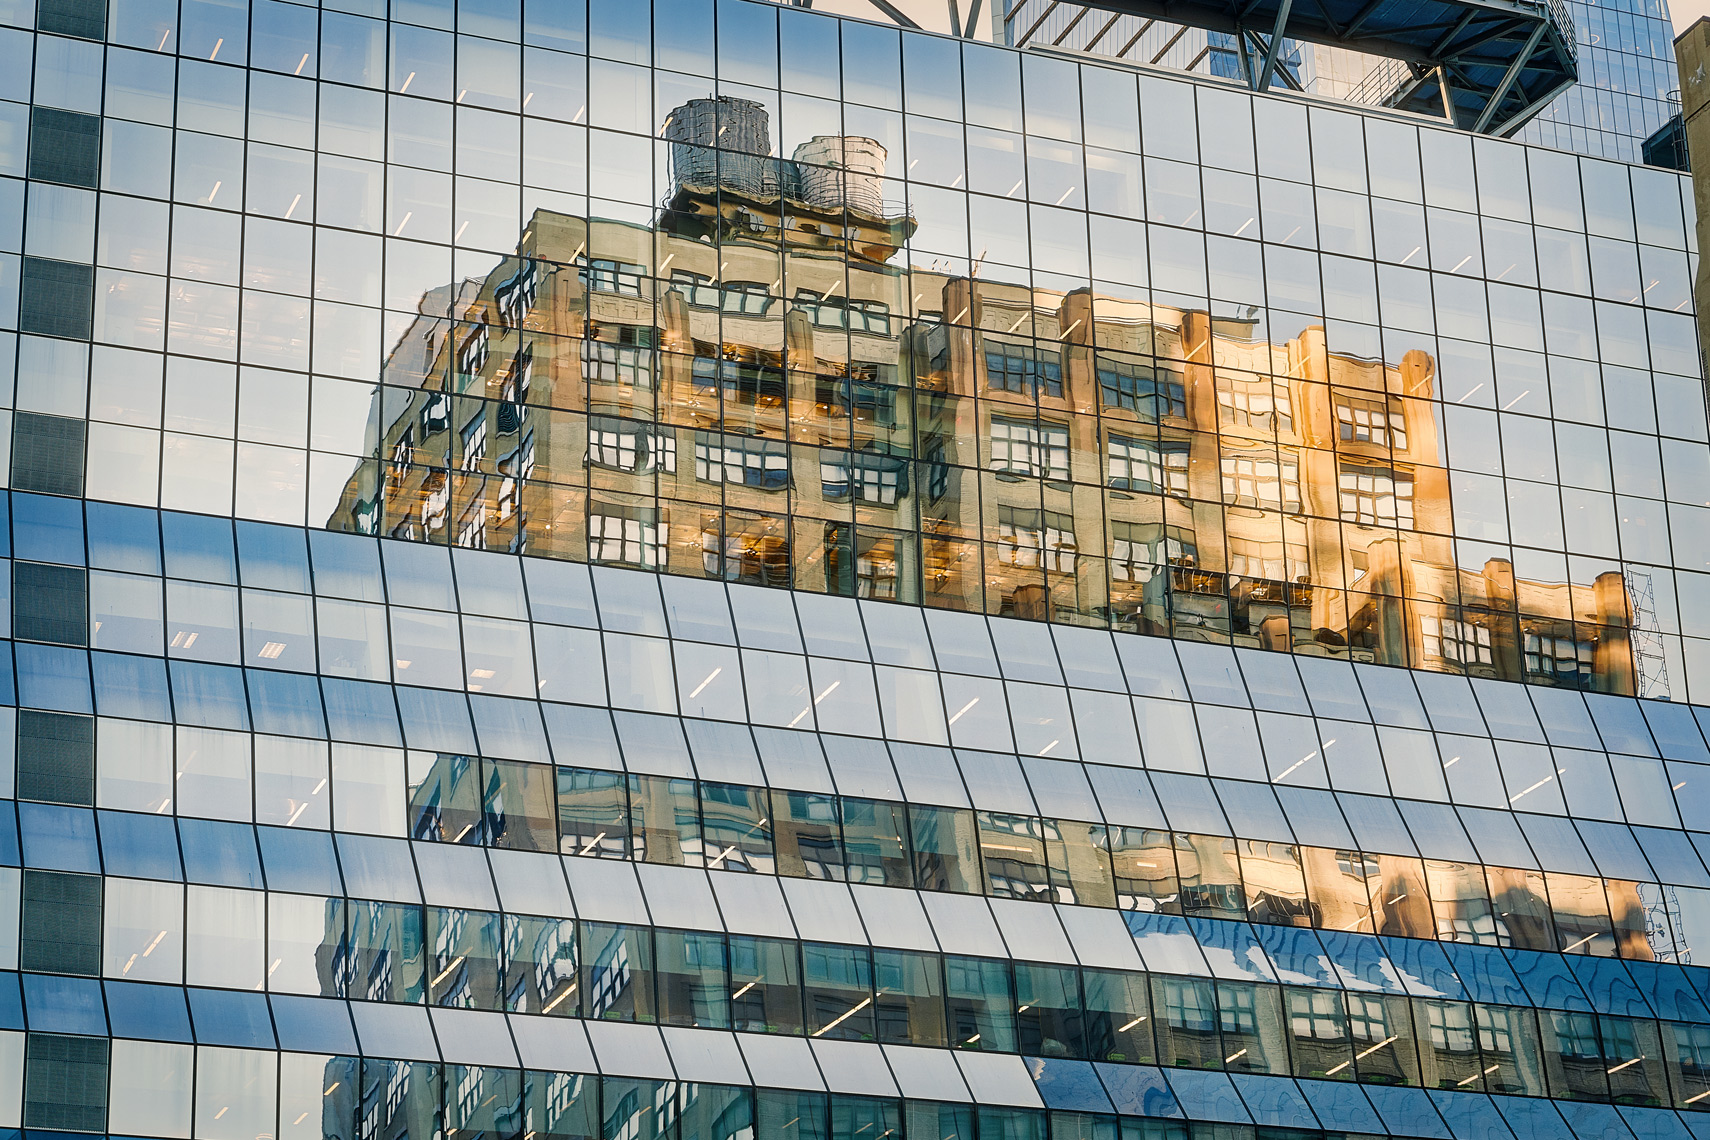 2019-Vancouver-FineArt-Photographer-ErichSaide-NewYork-Buildings-Landscape-Reflections